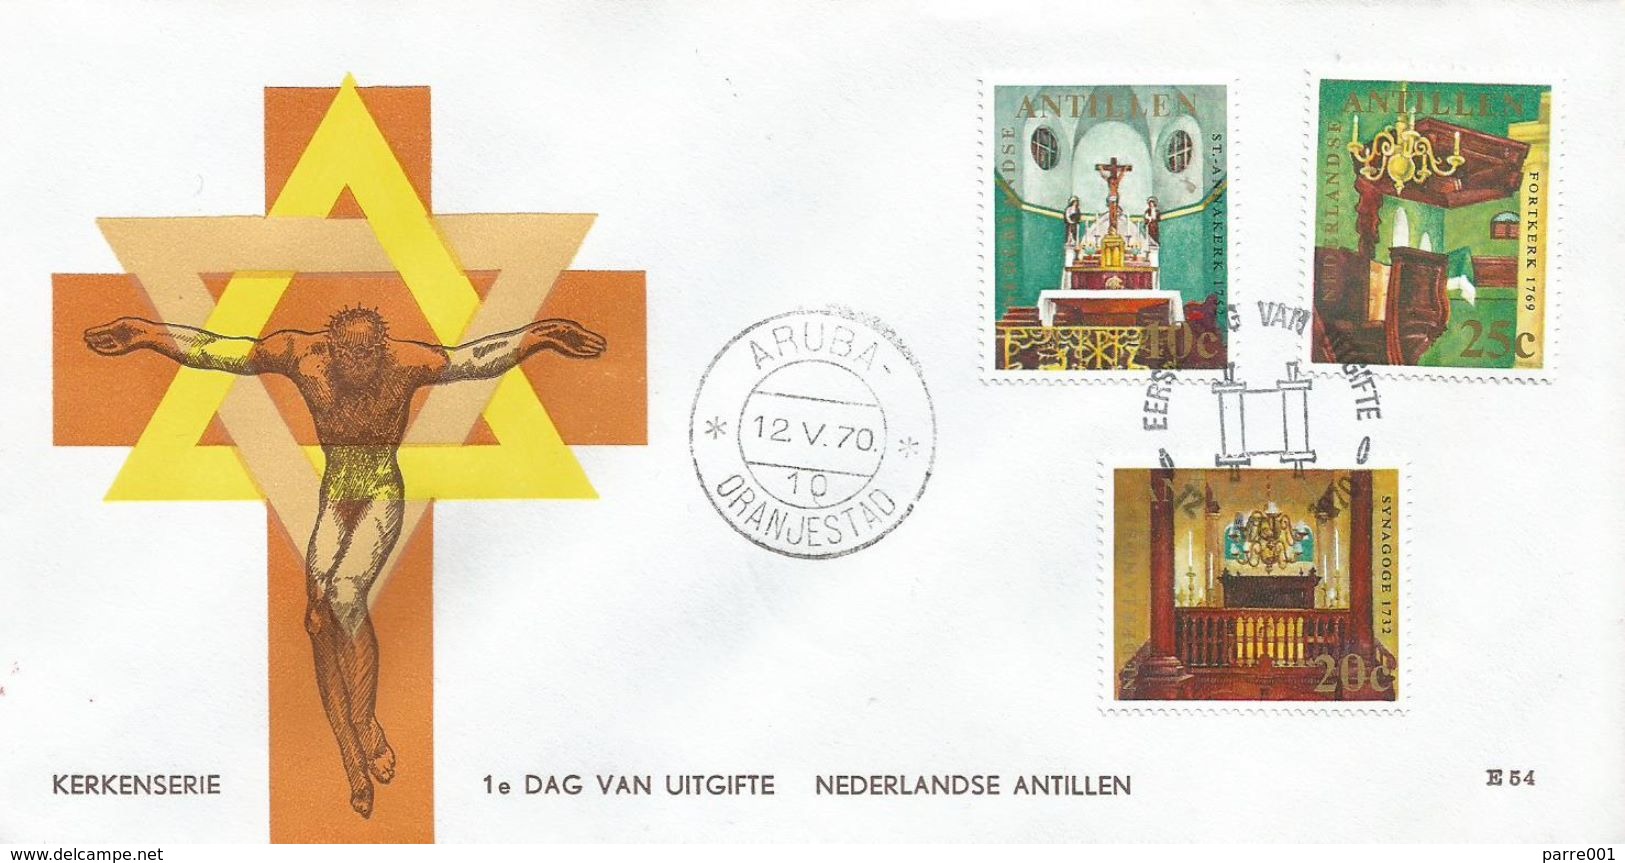 Netherlands Antilles 1970 Aruba Curaçao Interior Emanuel-Synagoge Punda Anna Church Obrabanda FDC Cover - Judaisme